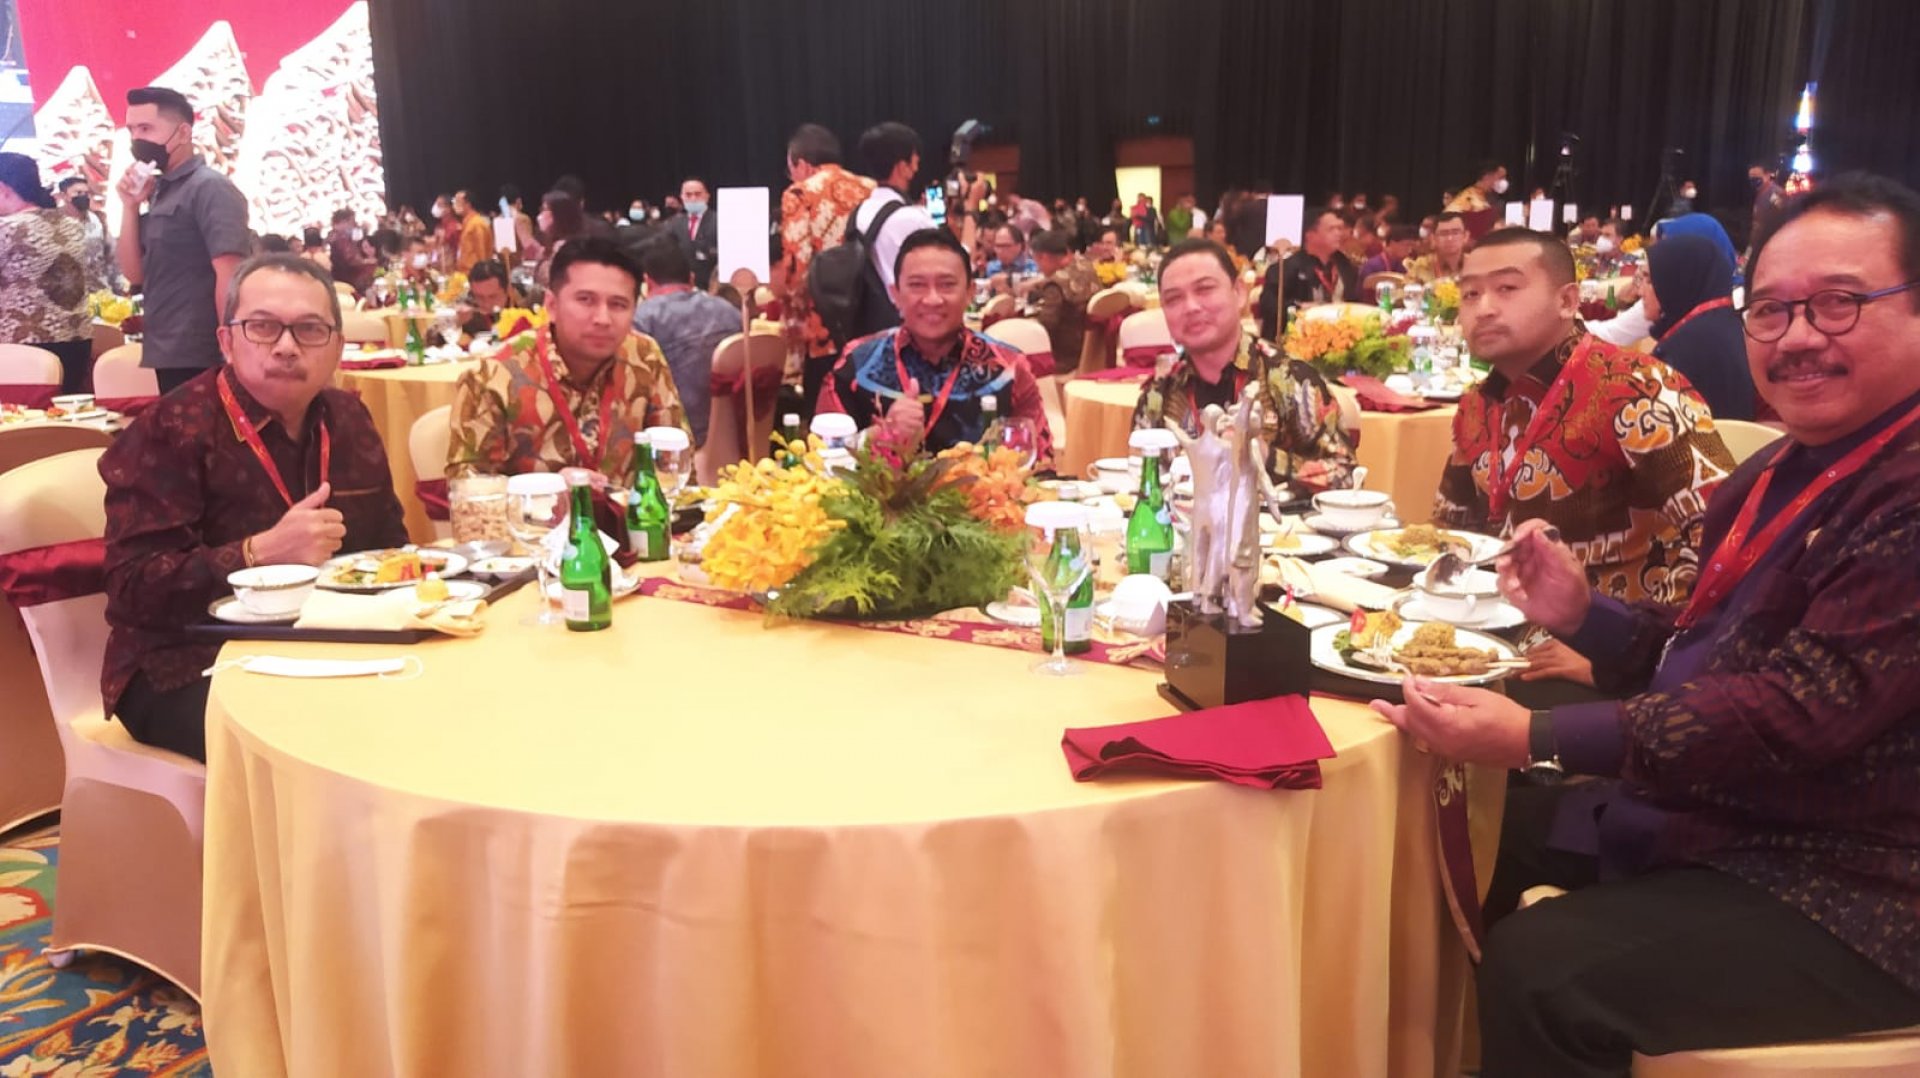 Wagub Kalteng Hadiri Pertemuan Tahunan Bank Indonesia